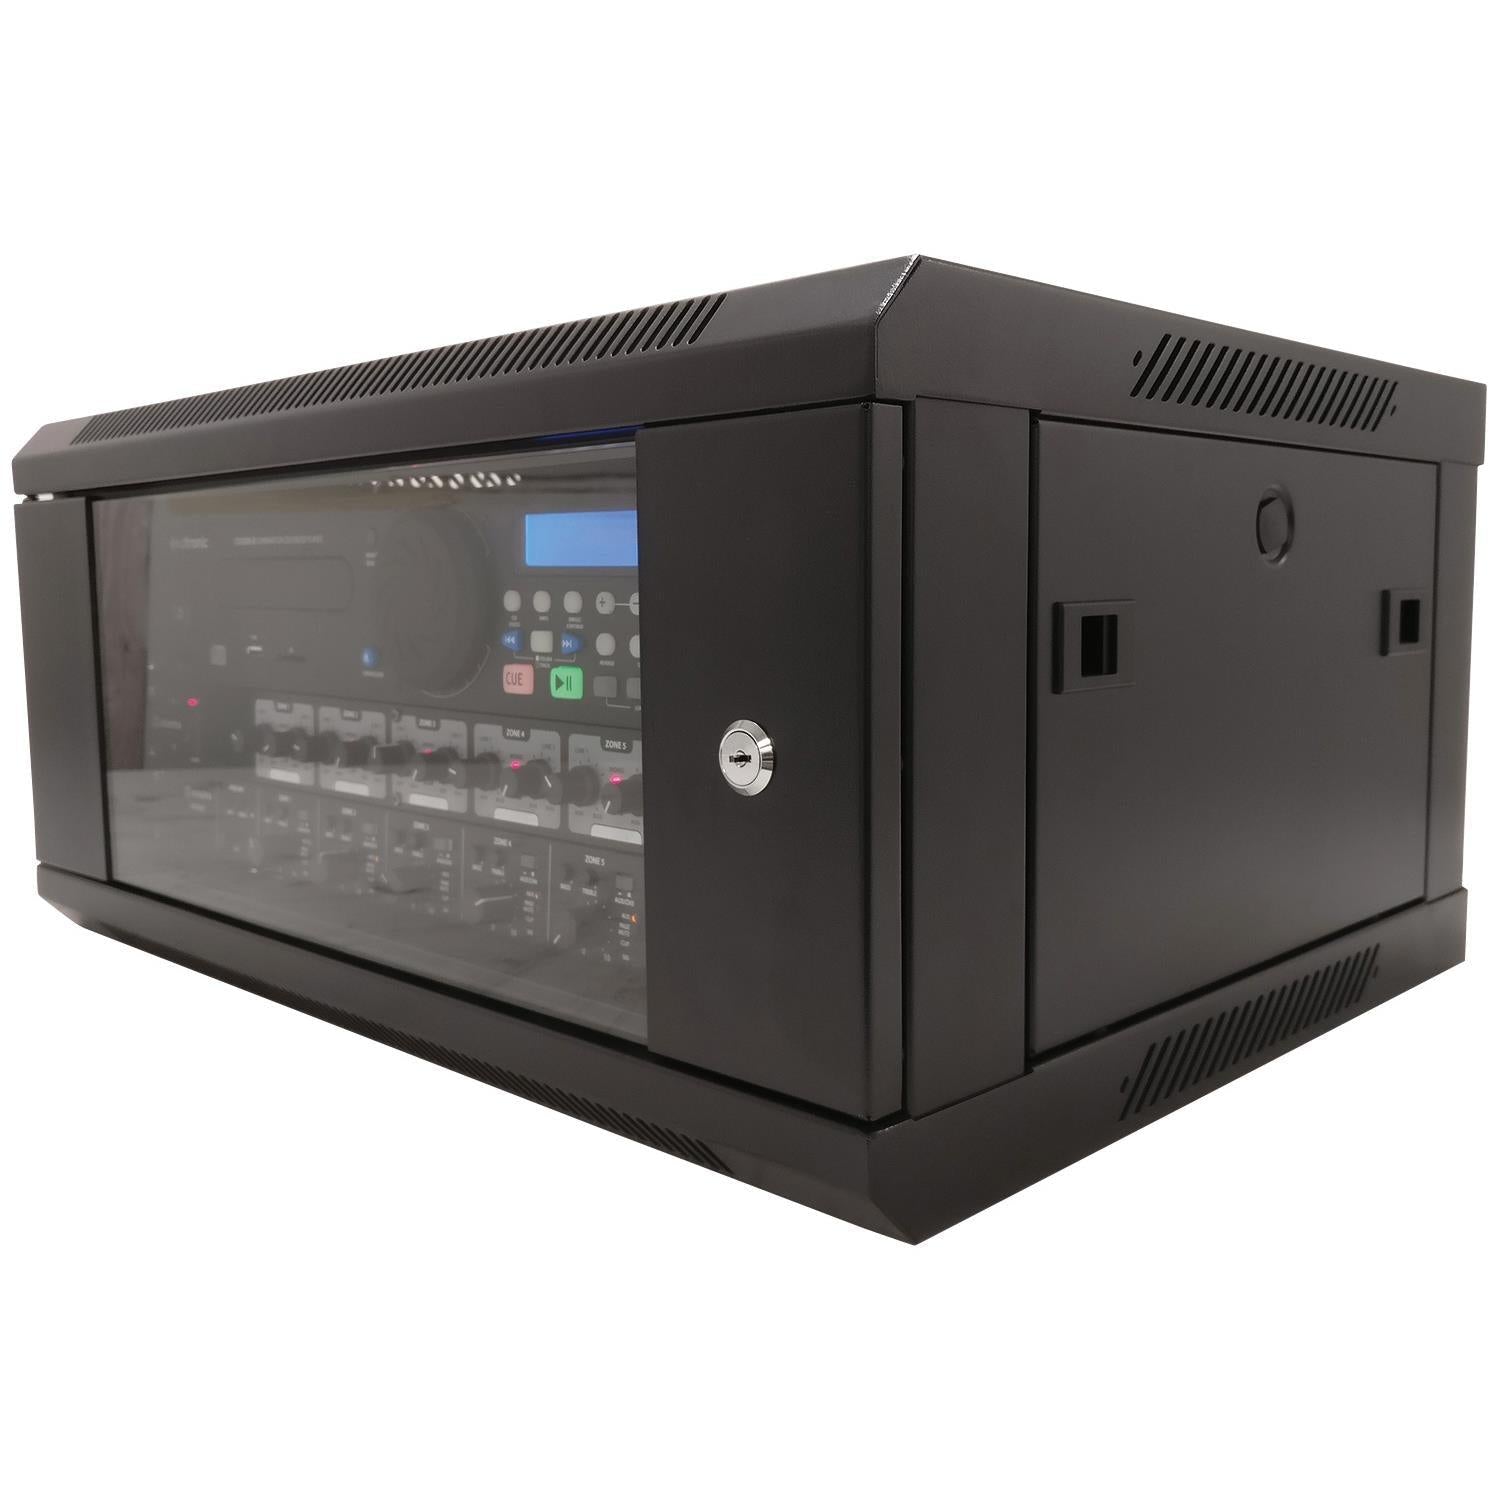 19" Rack Cabinet 12u x 450mm Deep - DY Pro Audio